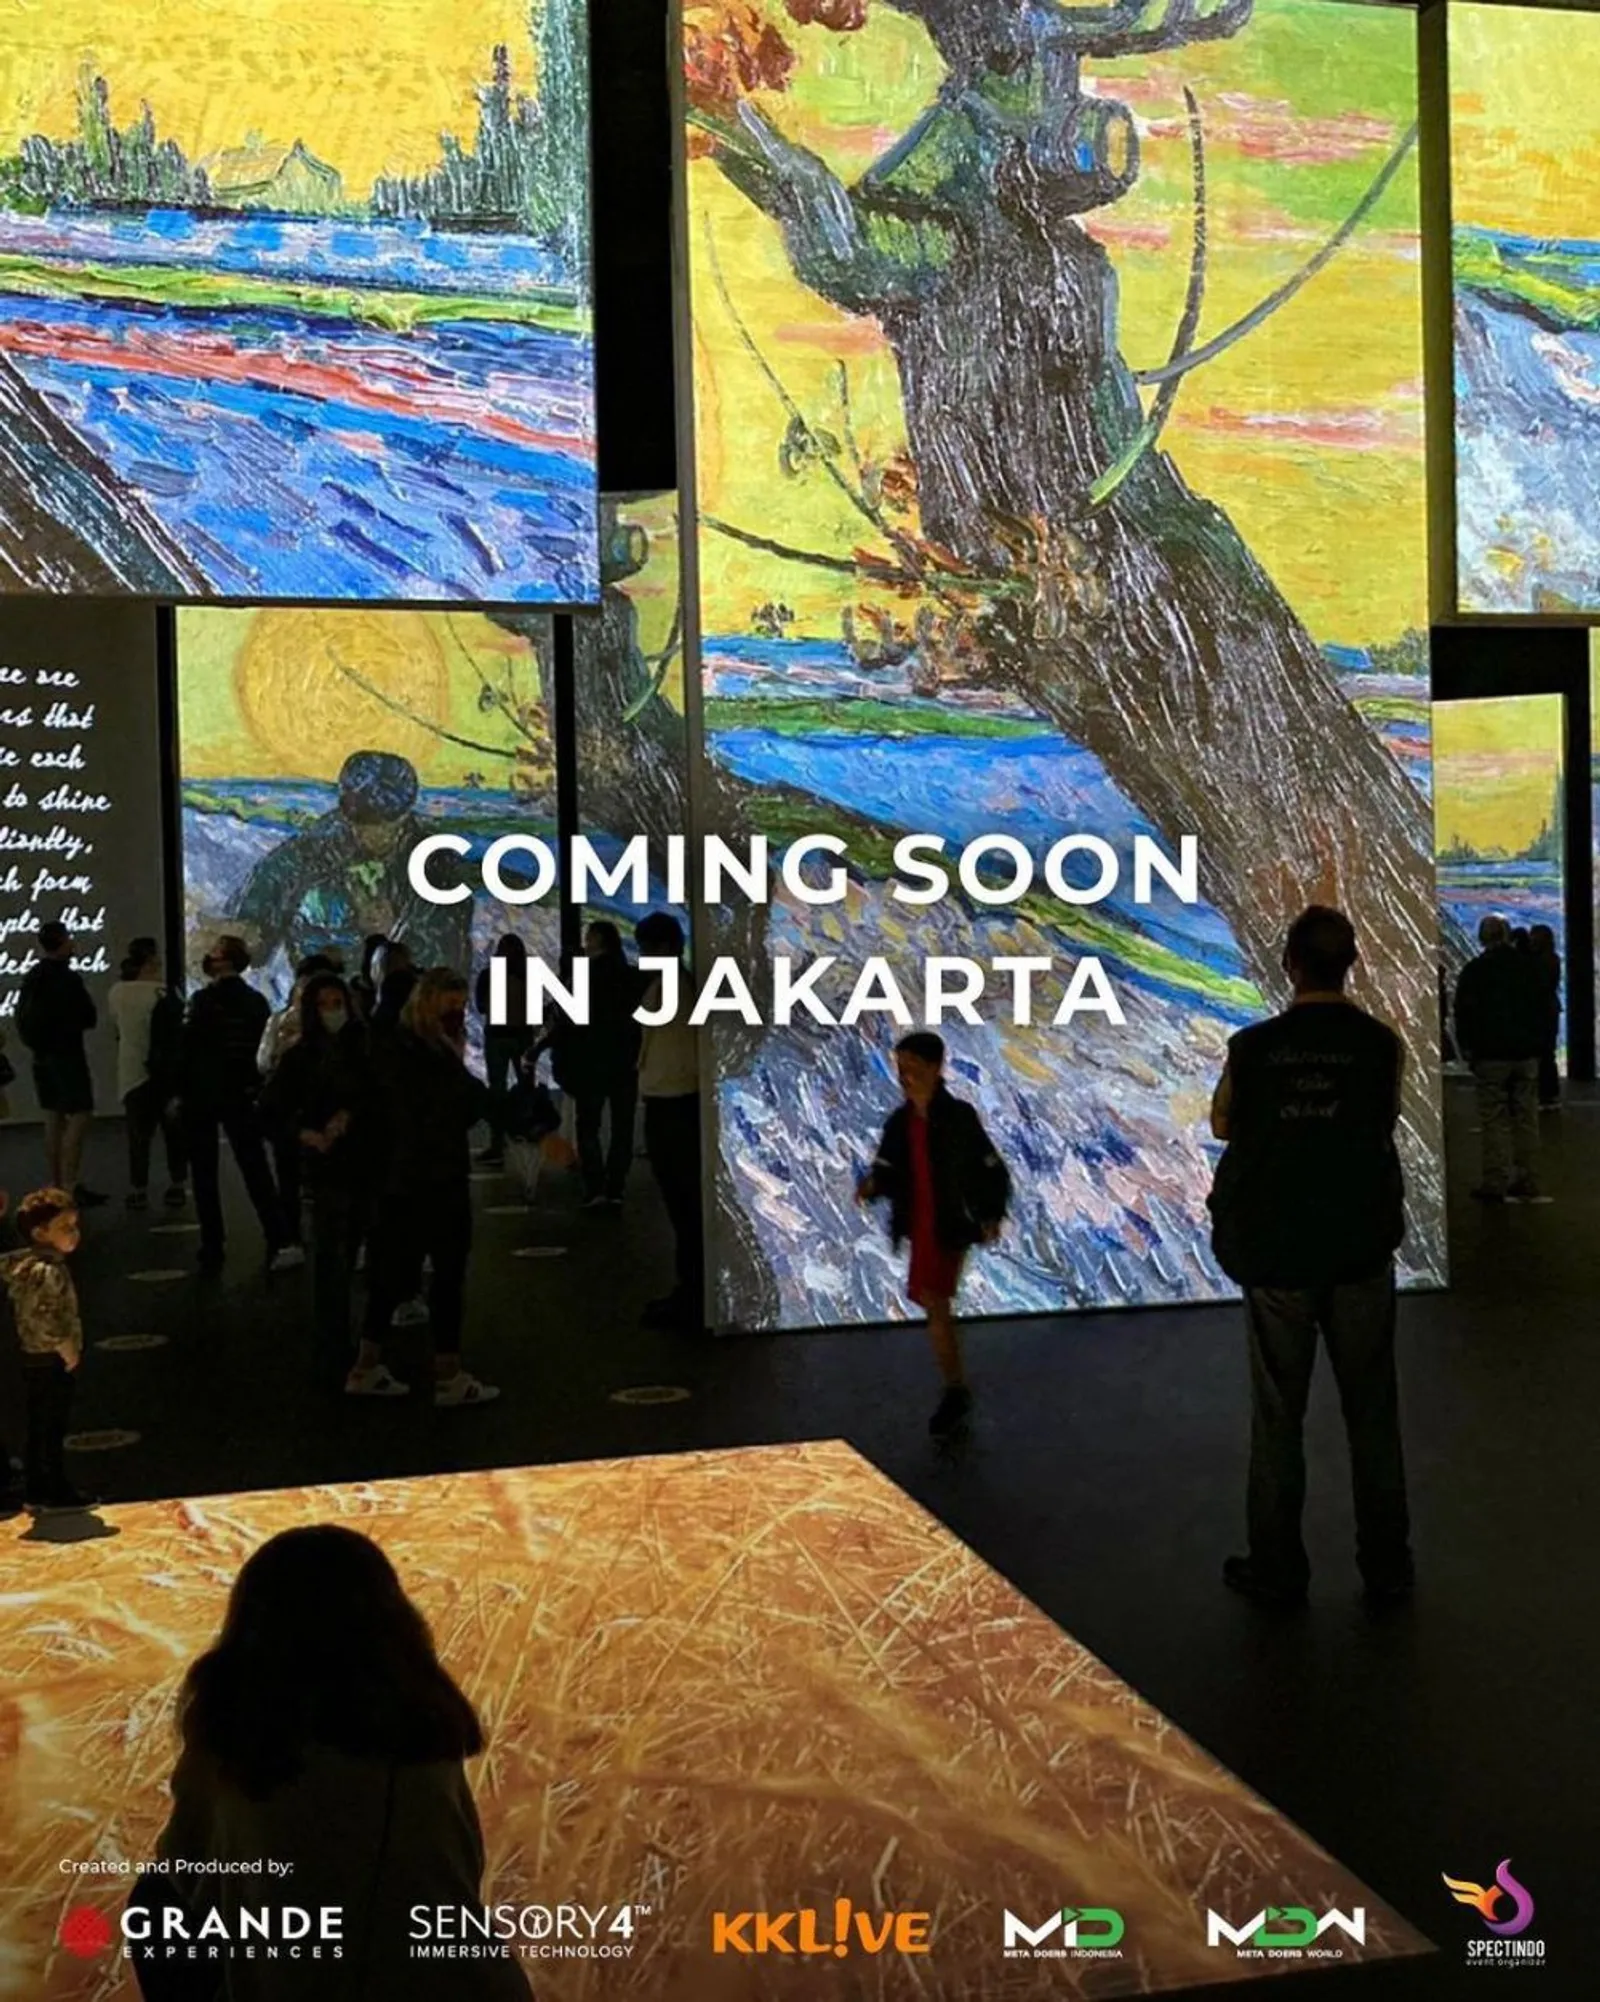 Lukisan Karya Van Gogh Hadir di Jakarta, Cek Jadwal dan HTMnya!